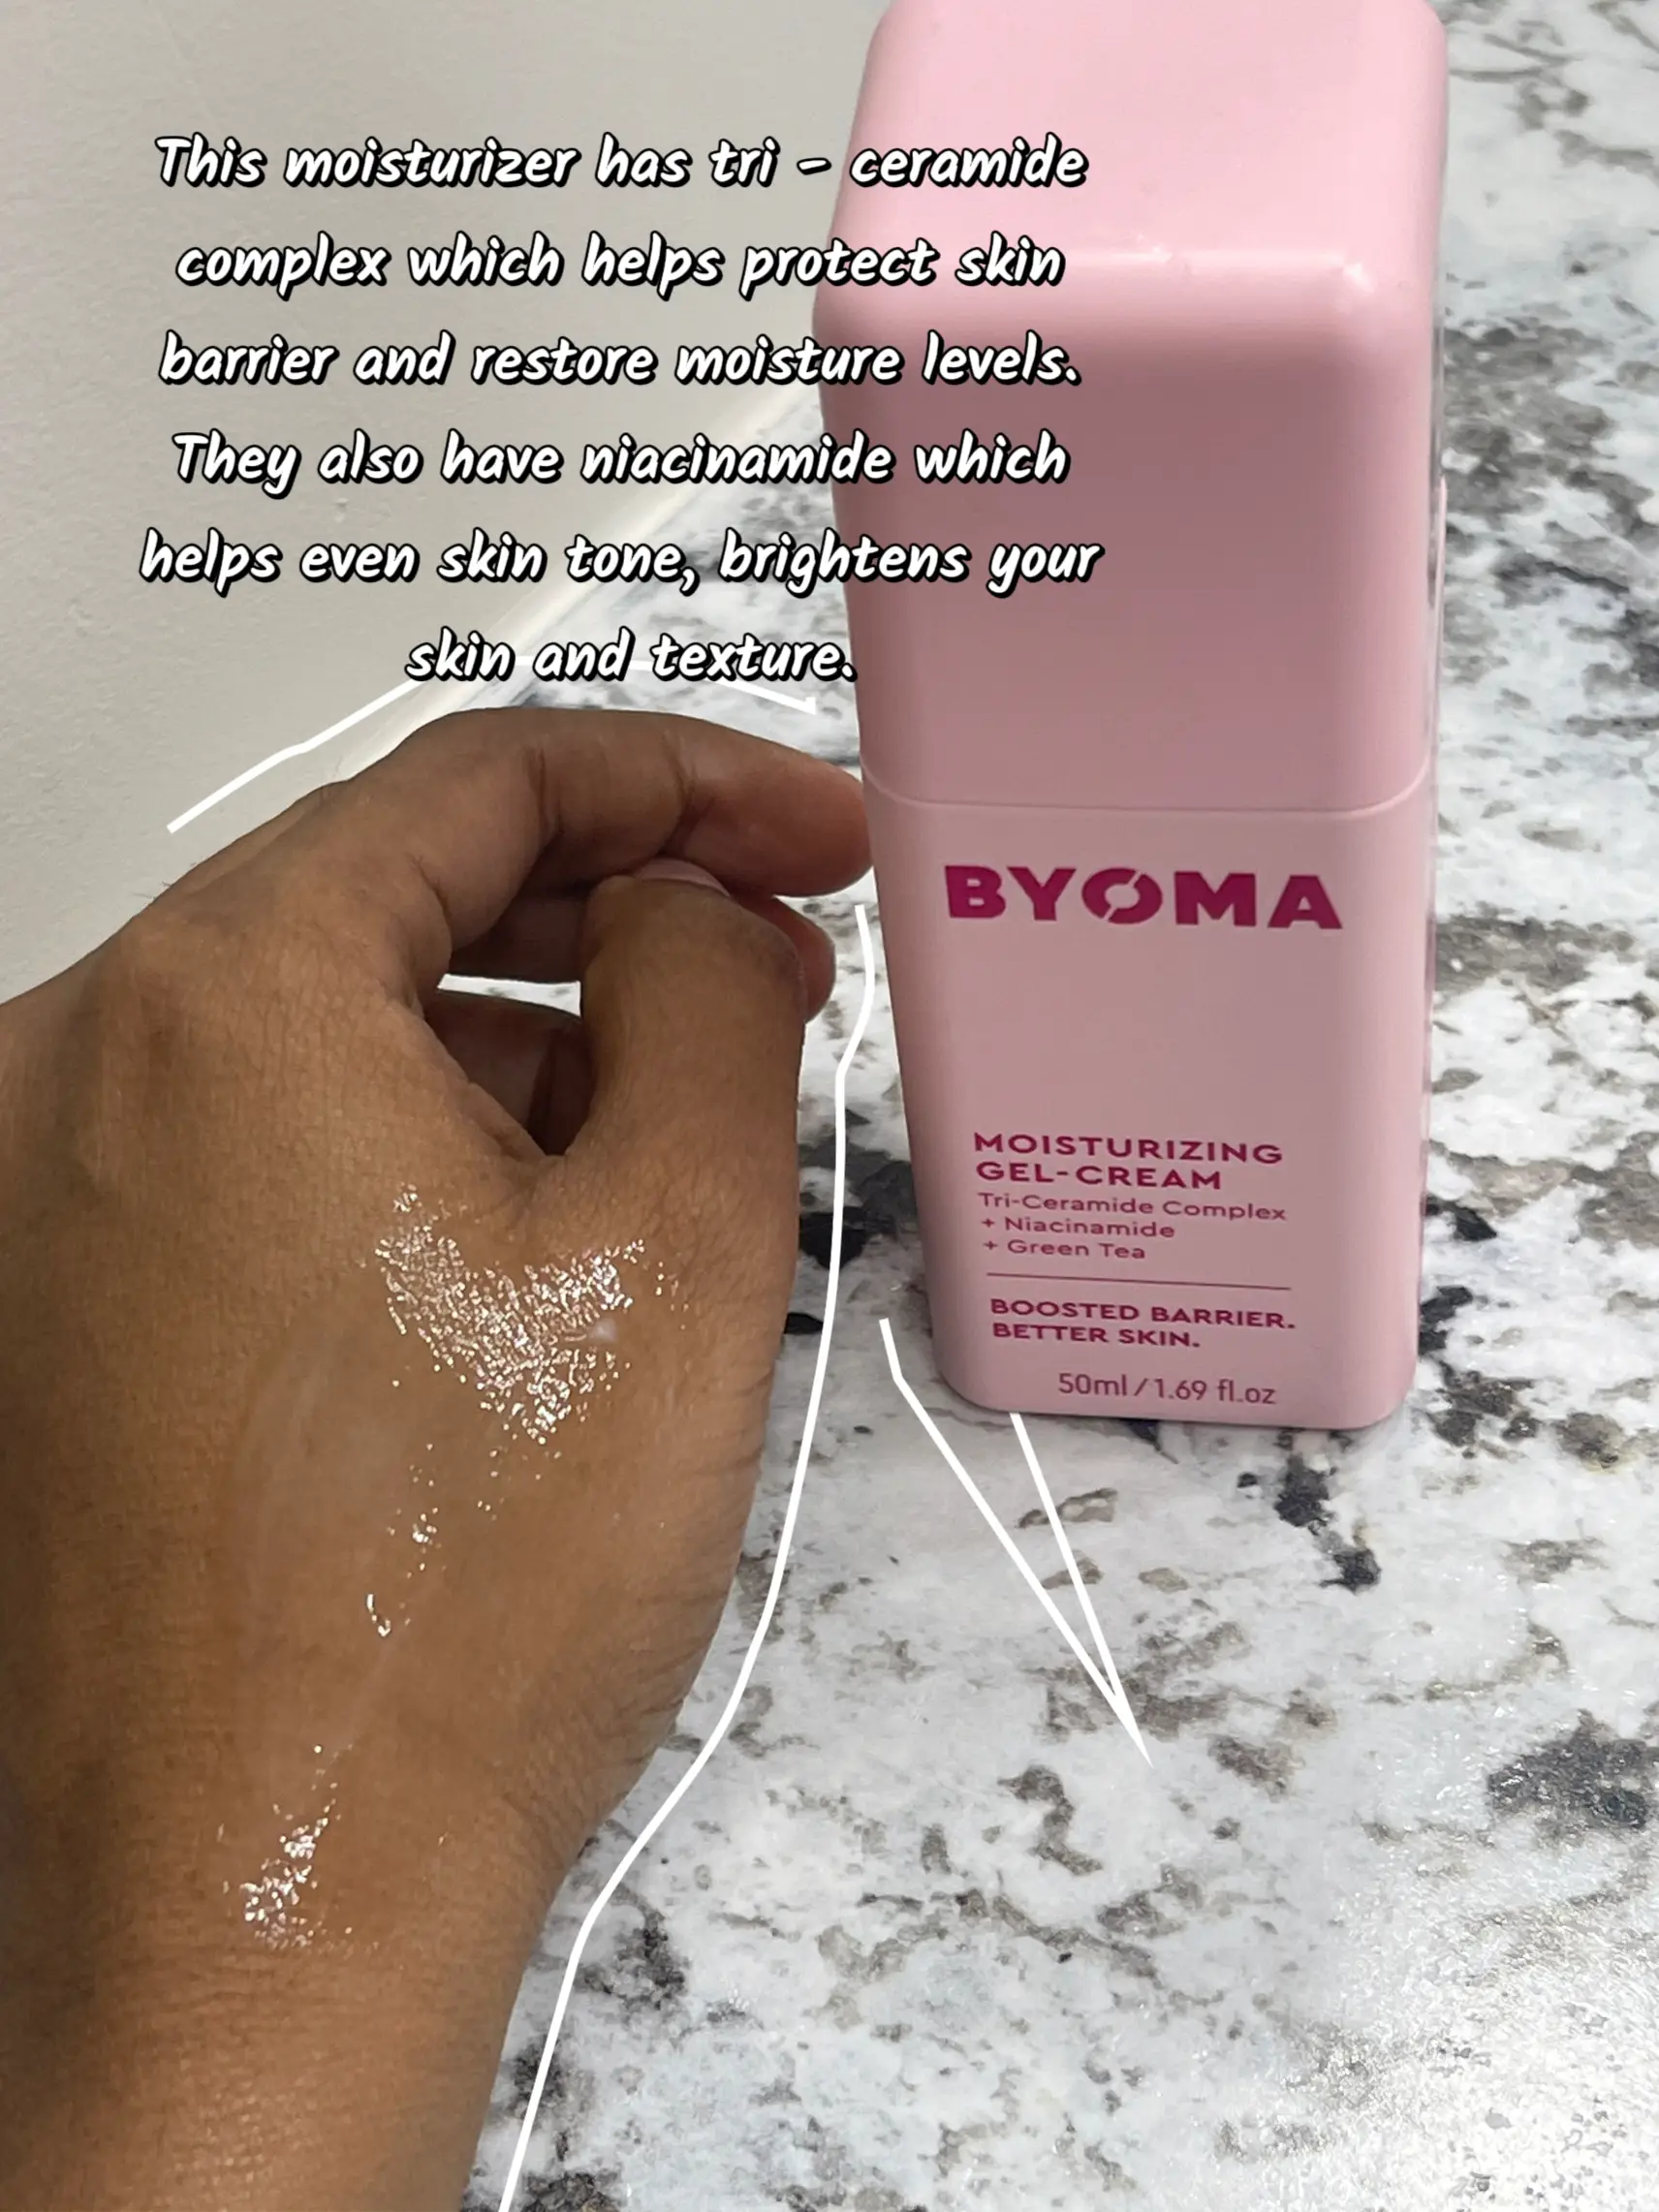 BYOMA Moisturizing Gel-Cream Tri-Ceramide Complex + Niacinamide + Green Tea  1.69